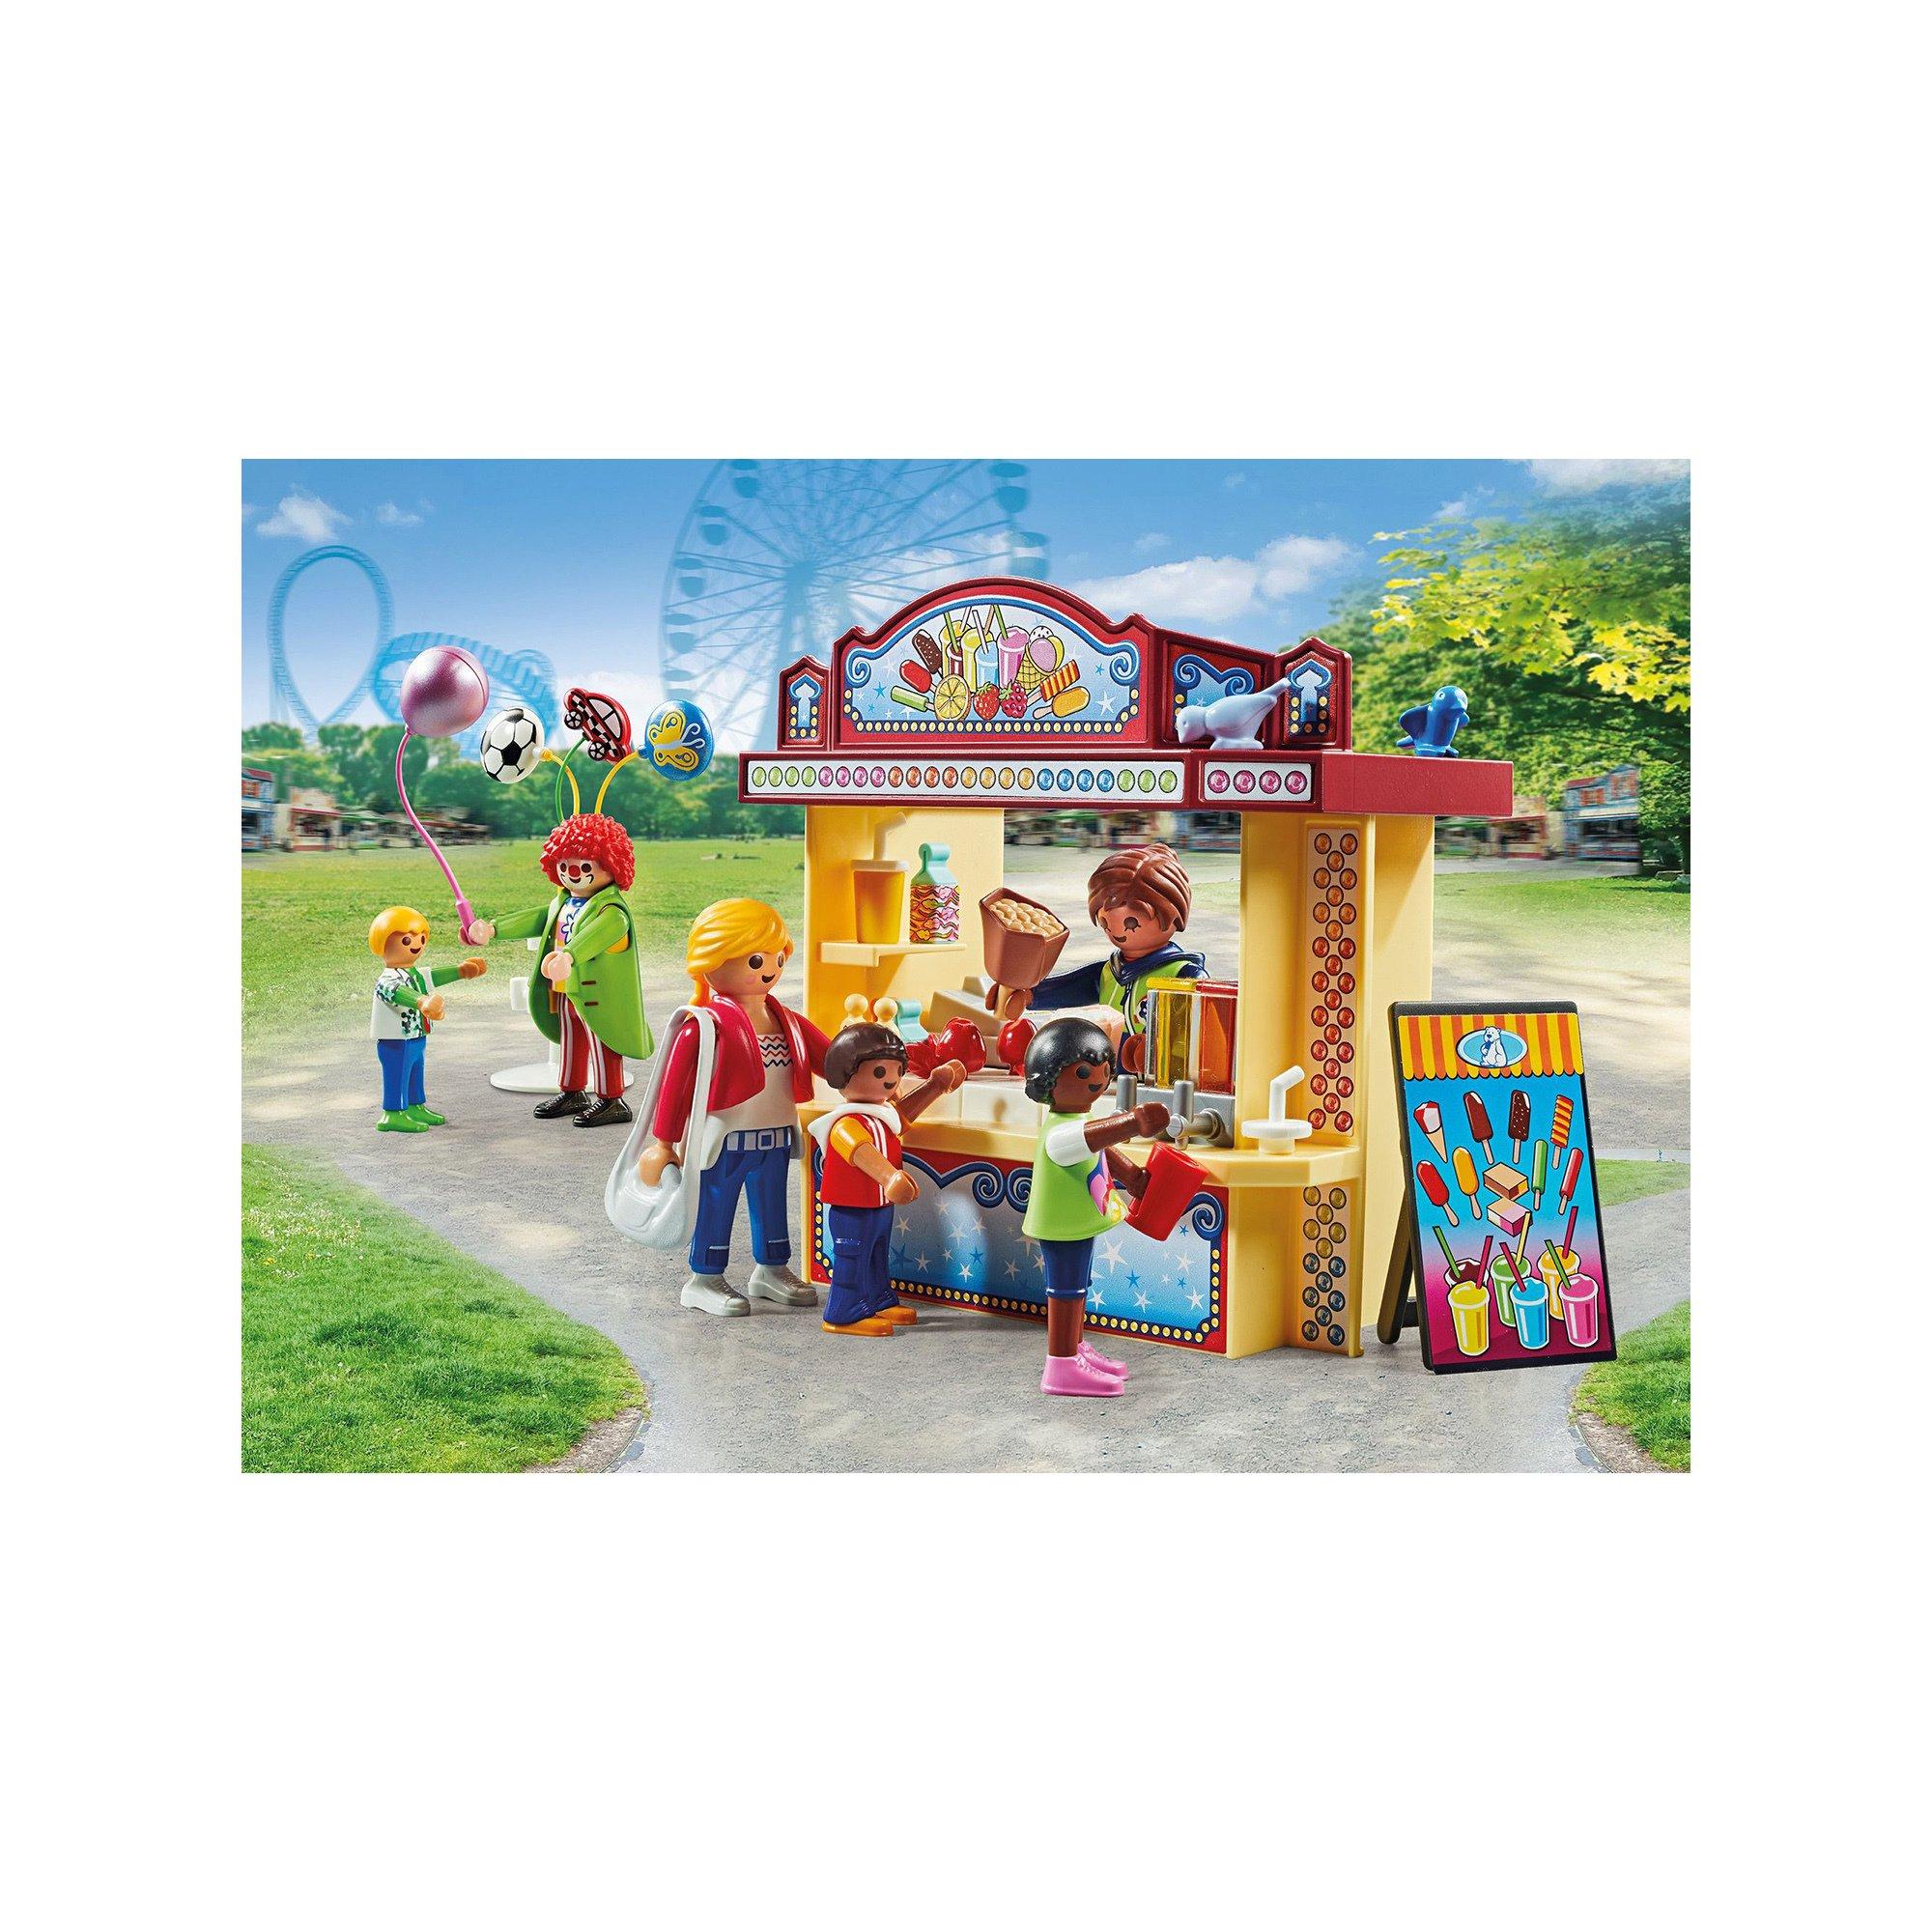 Playmobil  71452 Luna park 